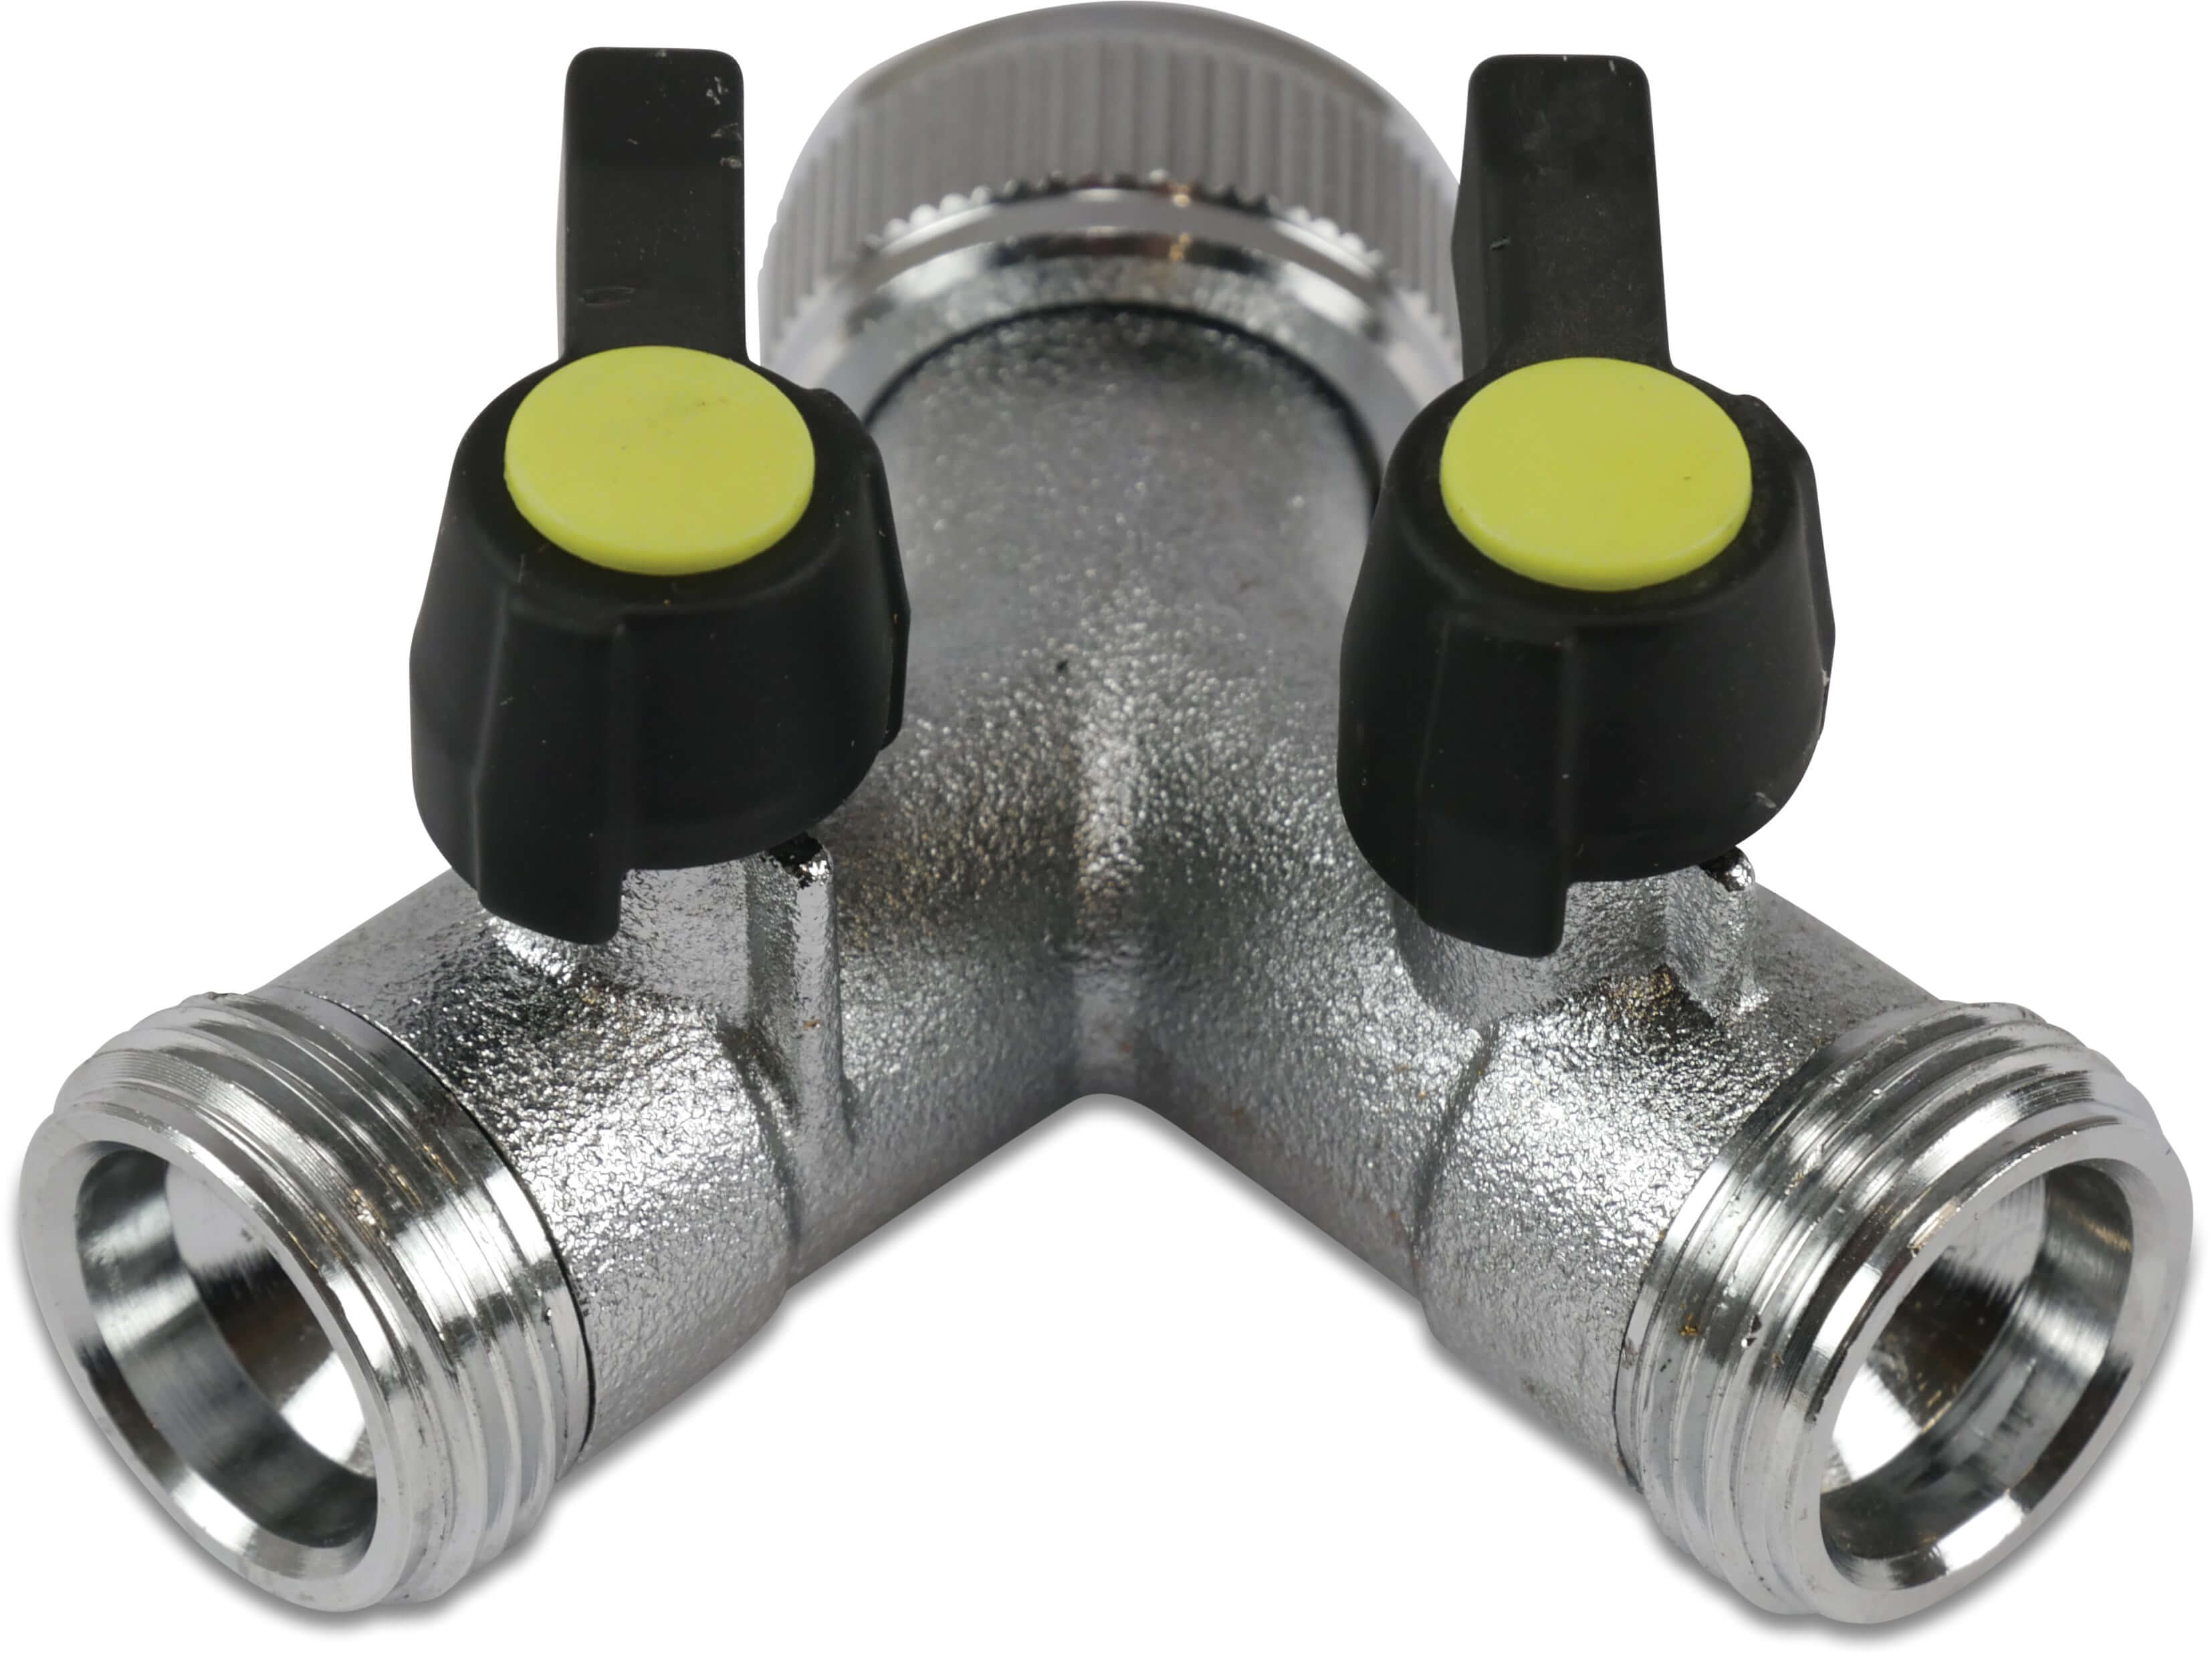 Hydro-S 3-way valve brass 3/4" female threaded nut x male thread x male thread type with ball valve